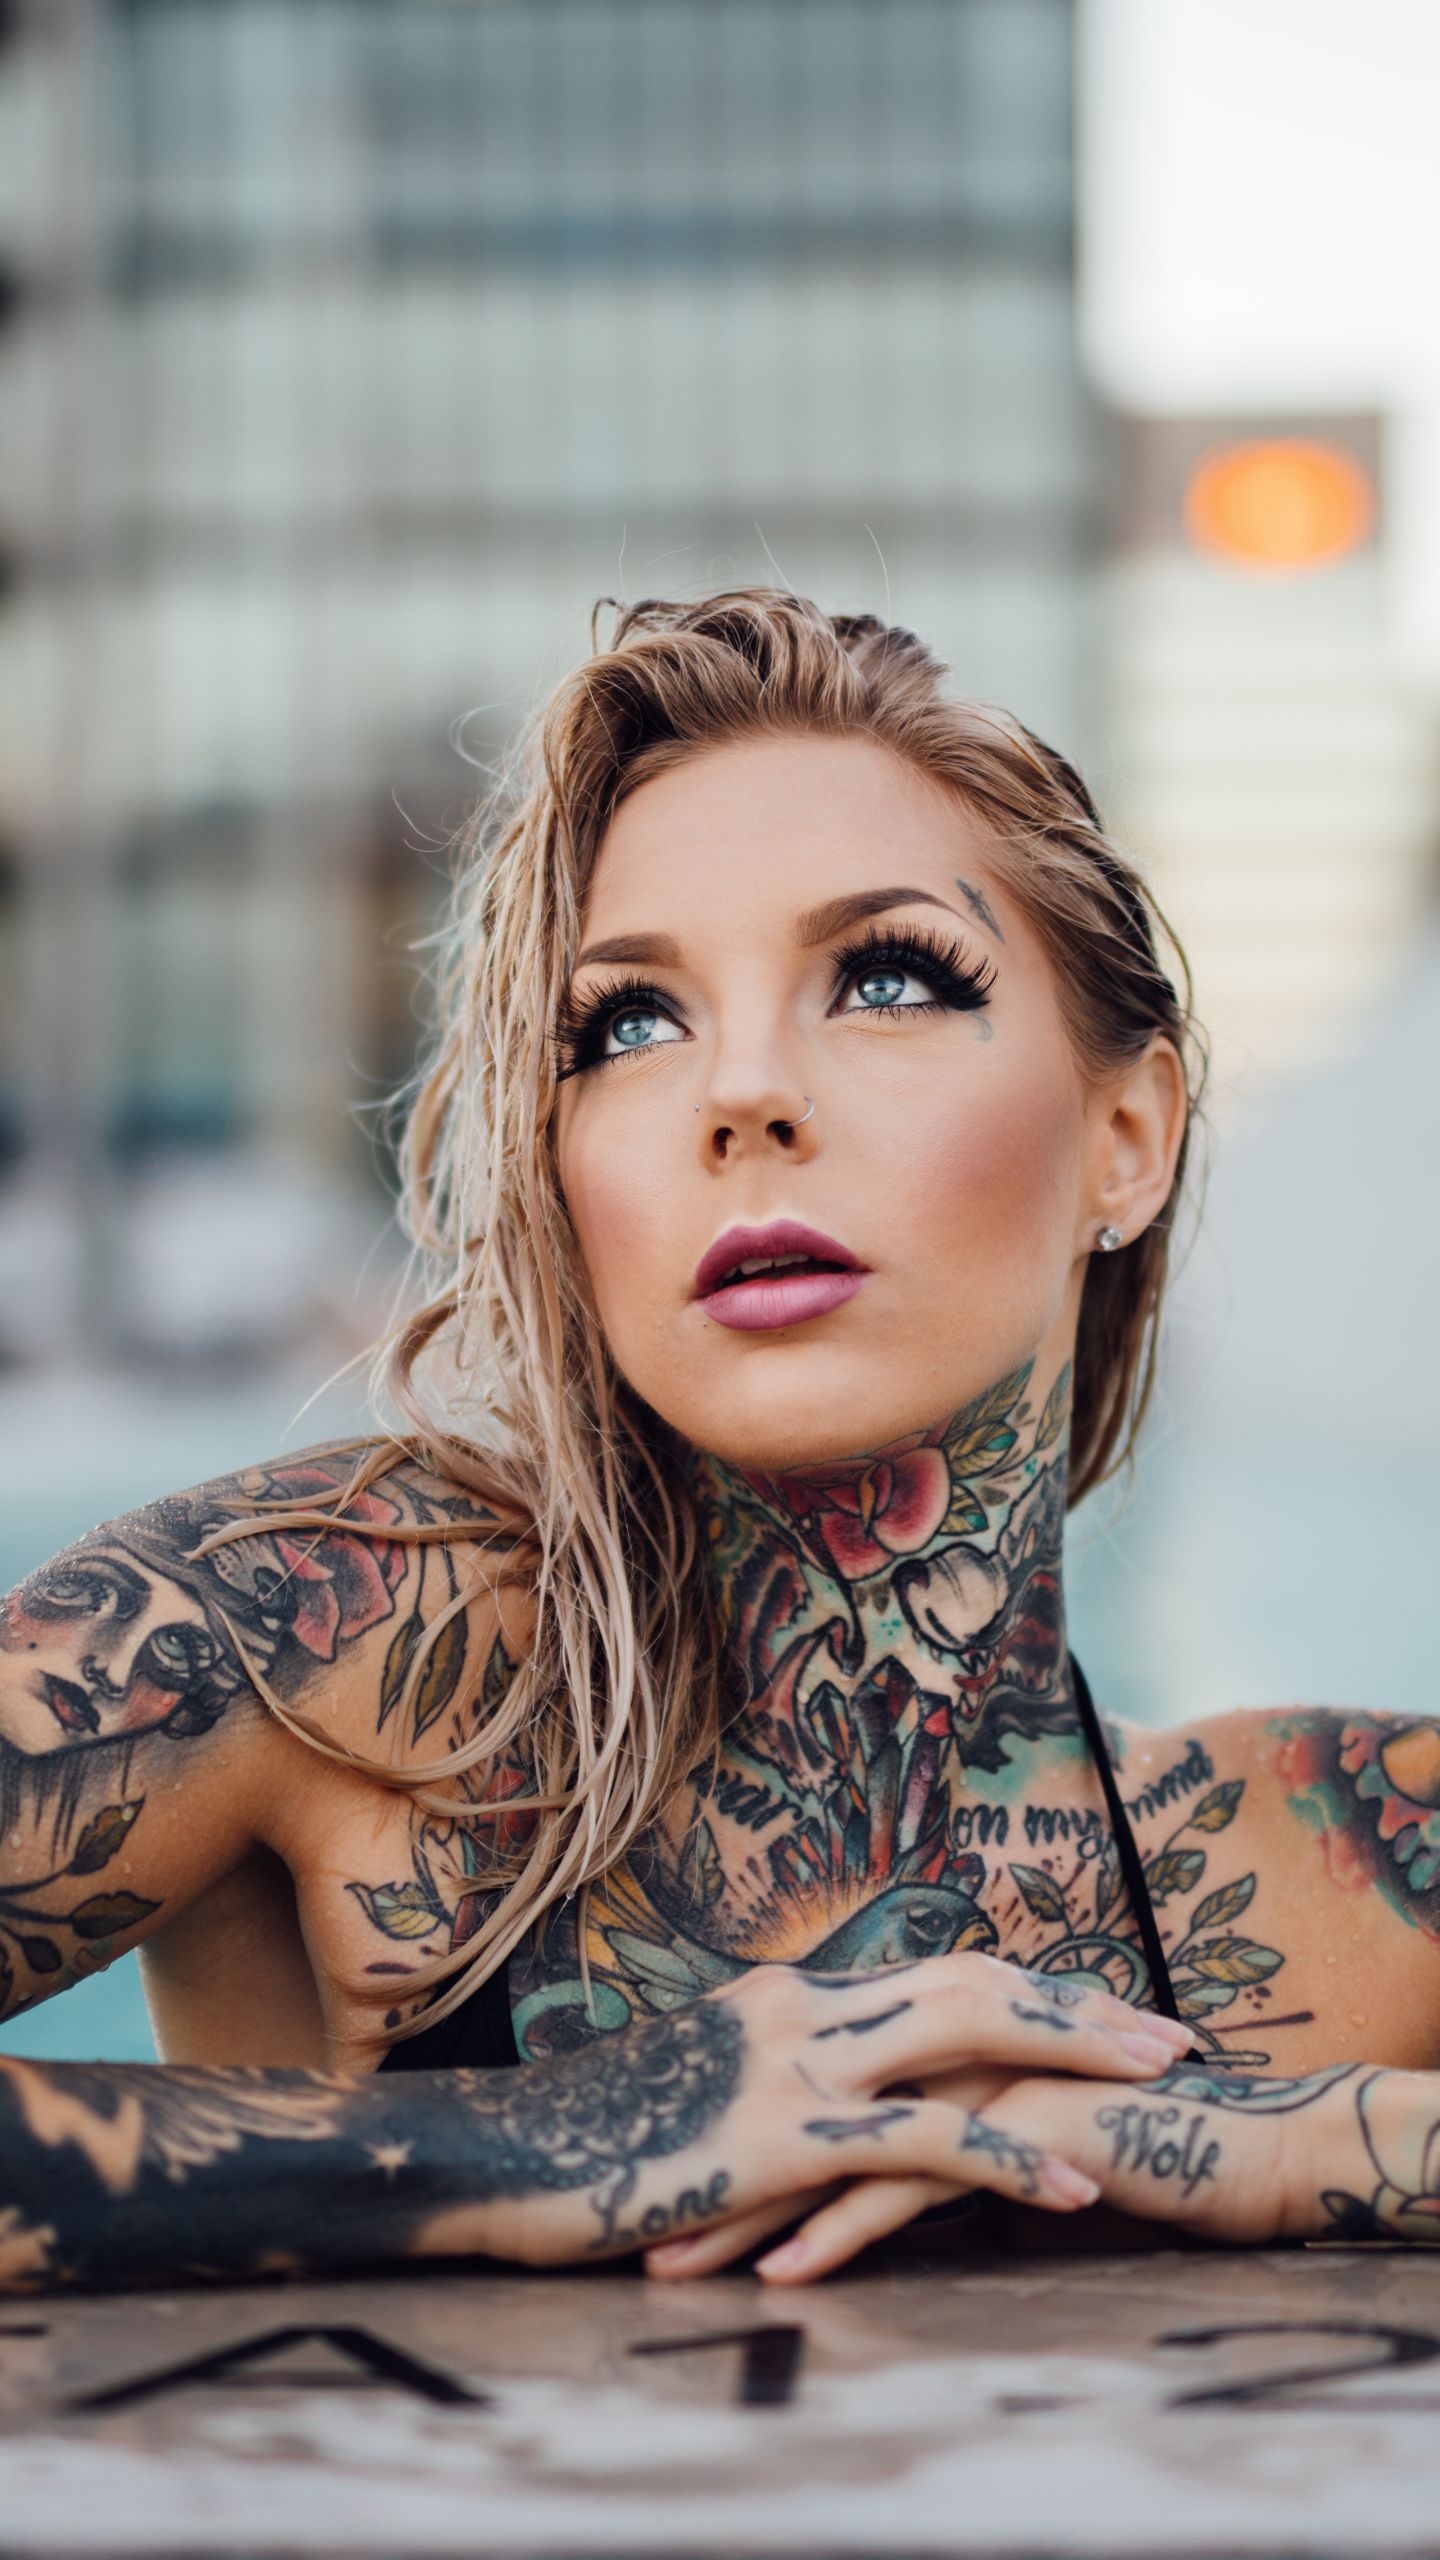 Supreme iPhone Wallpaper, Tattoos For Women, Girl Tattoos